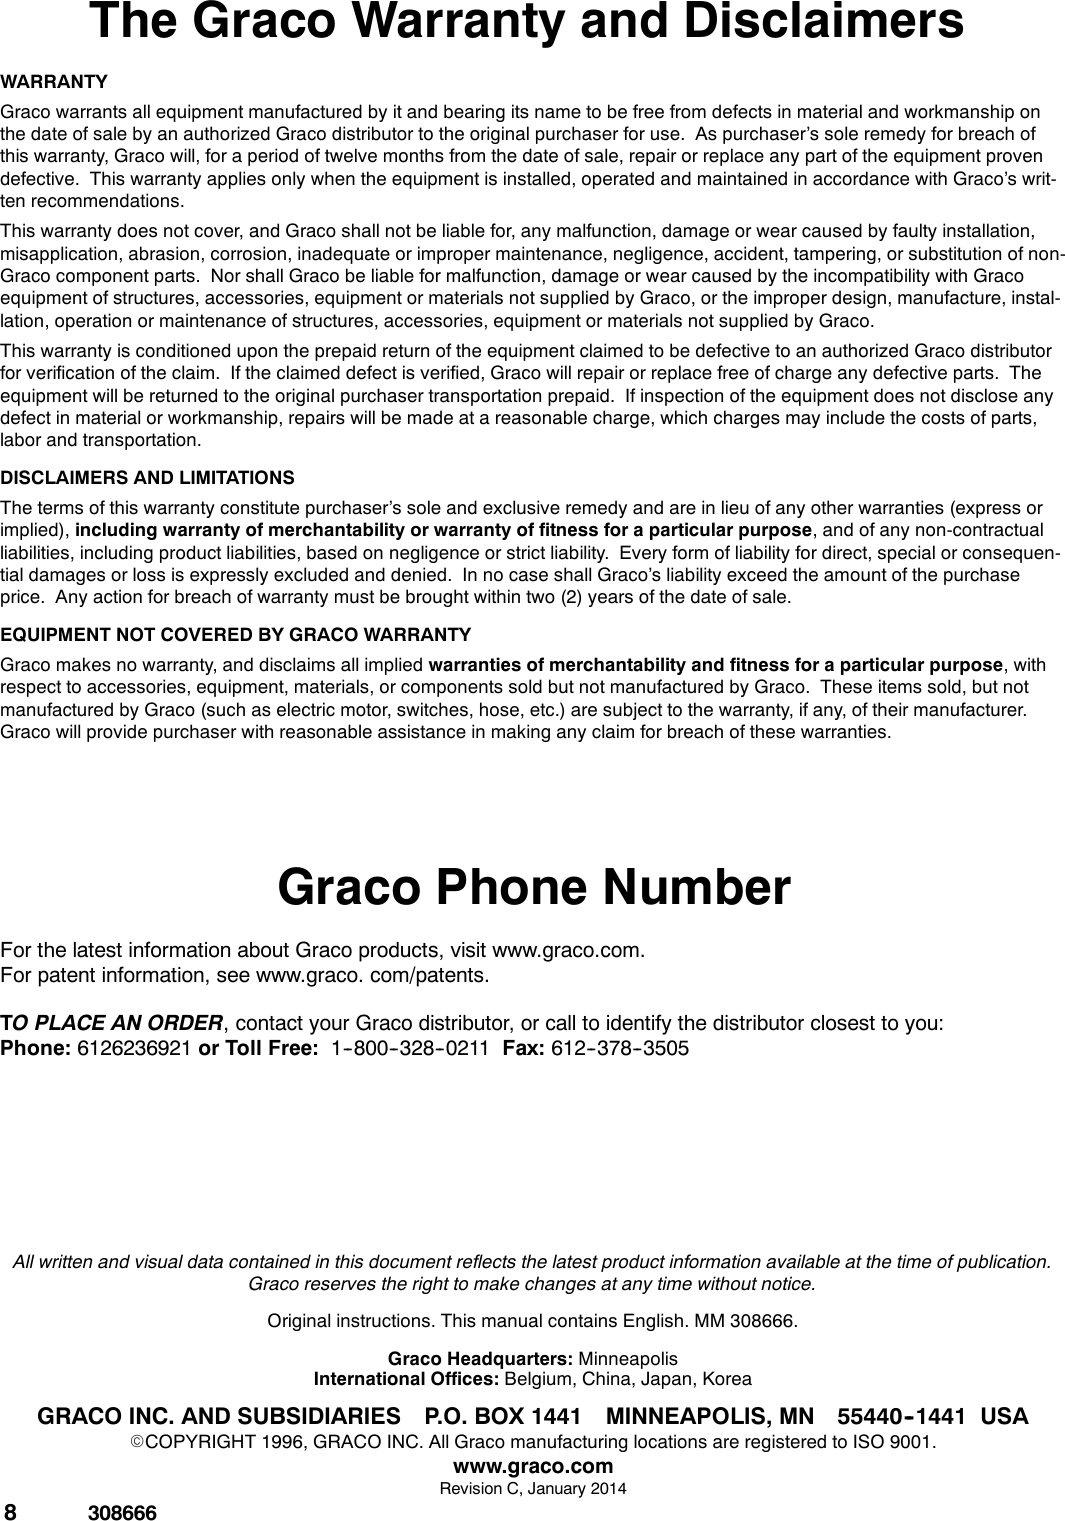 Page 8 of 8 - Graco Graco-308666C-Husky-515-55-Gallon-Dispenser-Package-Users-Manual- 308666C, Husky 515, 55-Gallon Dispenser Package, Instructions-Parts, English  Graco-308666c-husky-515-55-gallon-dispenser-package-users-manual